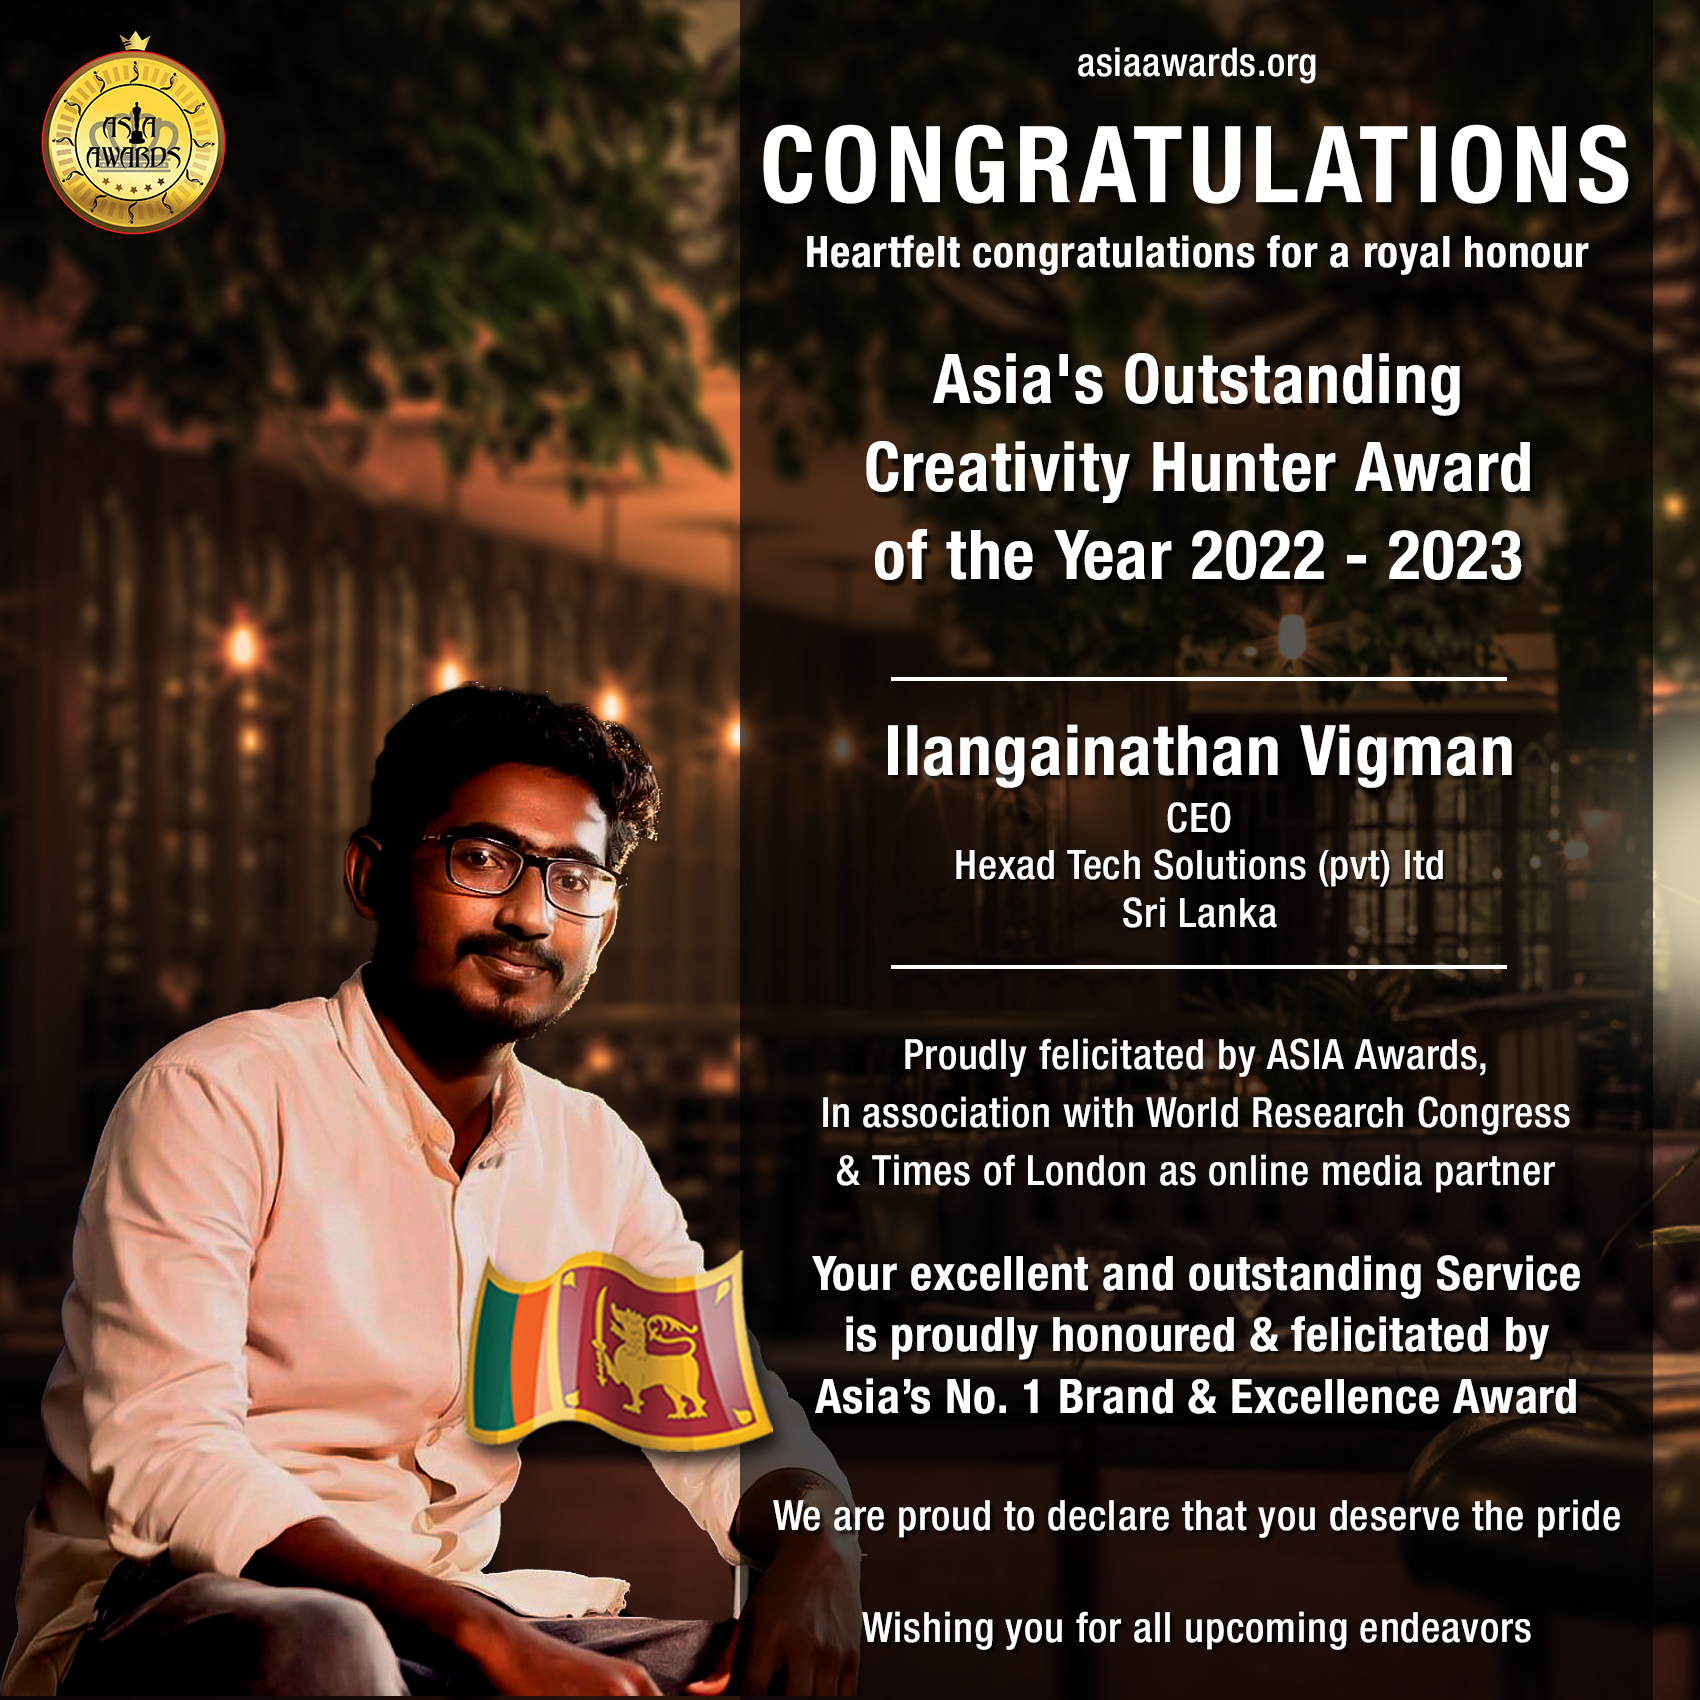 Ilangainathan vigman has bagged Asia's Outstanding Creativity Hunter Award